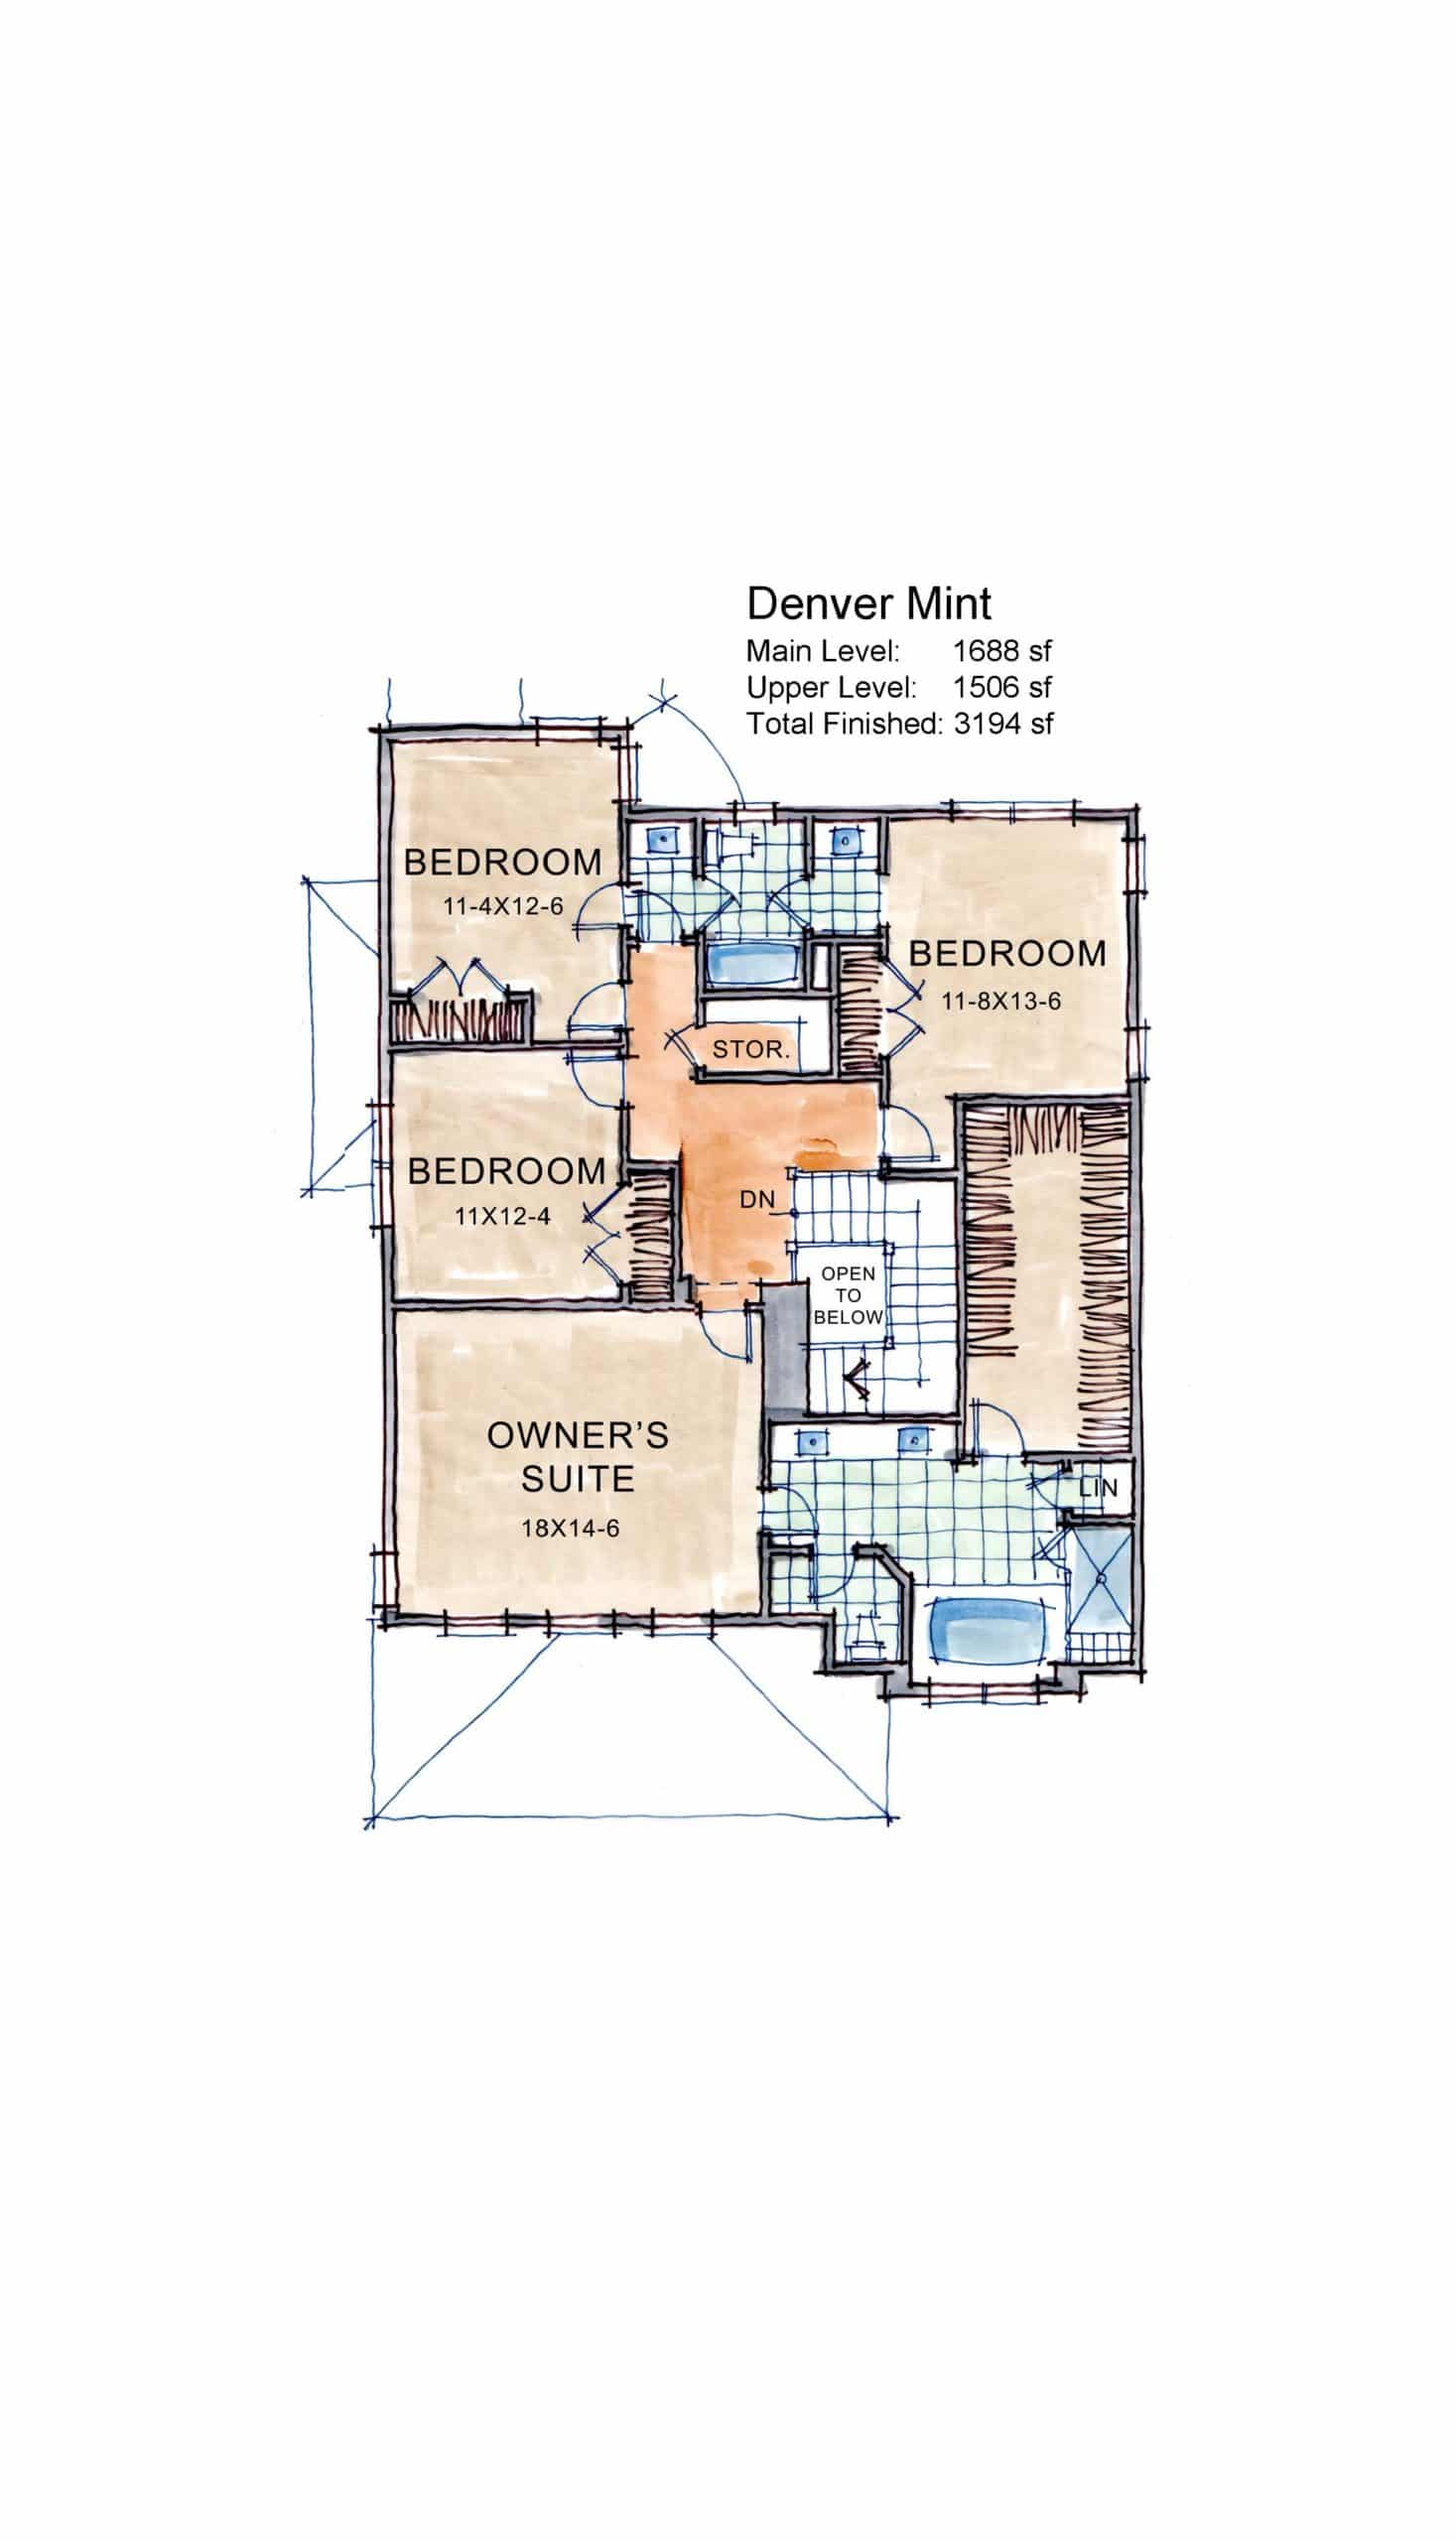 Denver Mint three bedroom house design